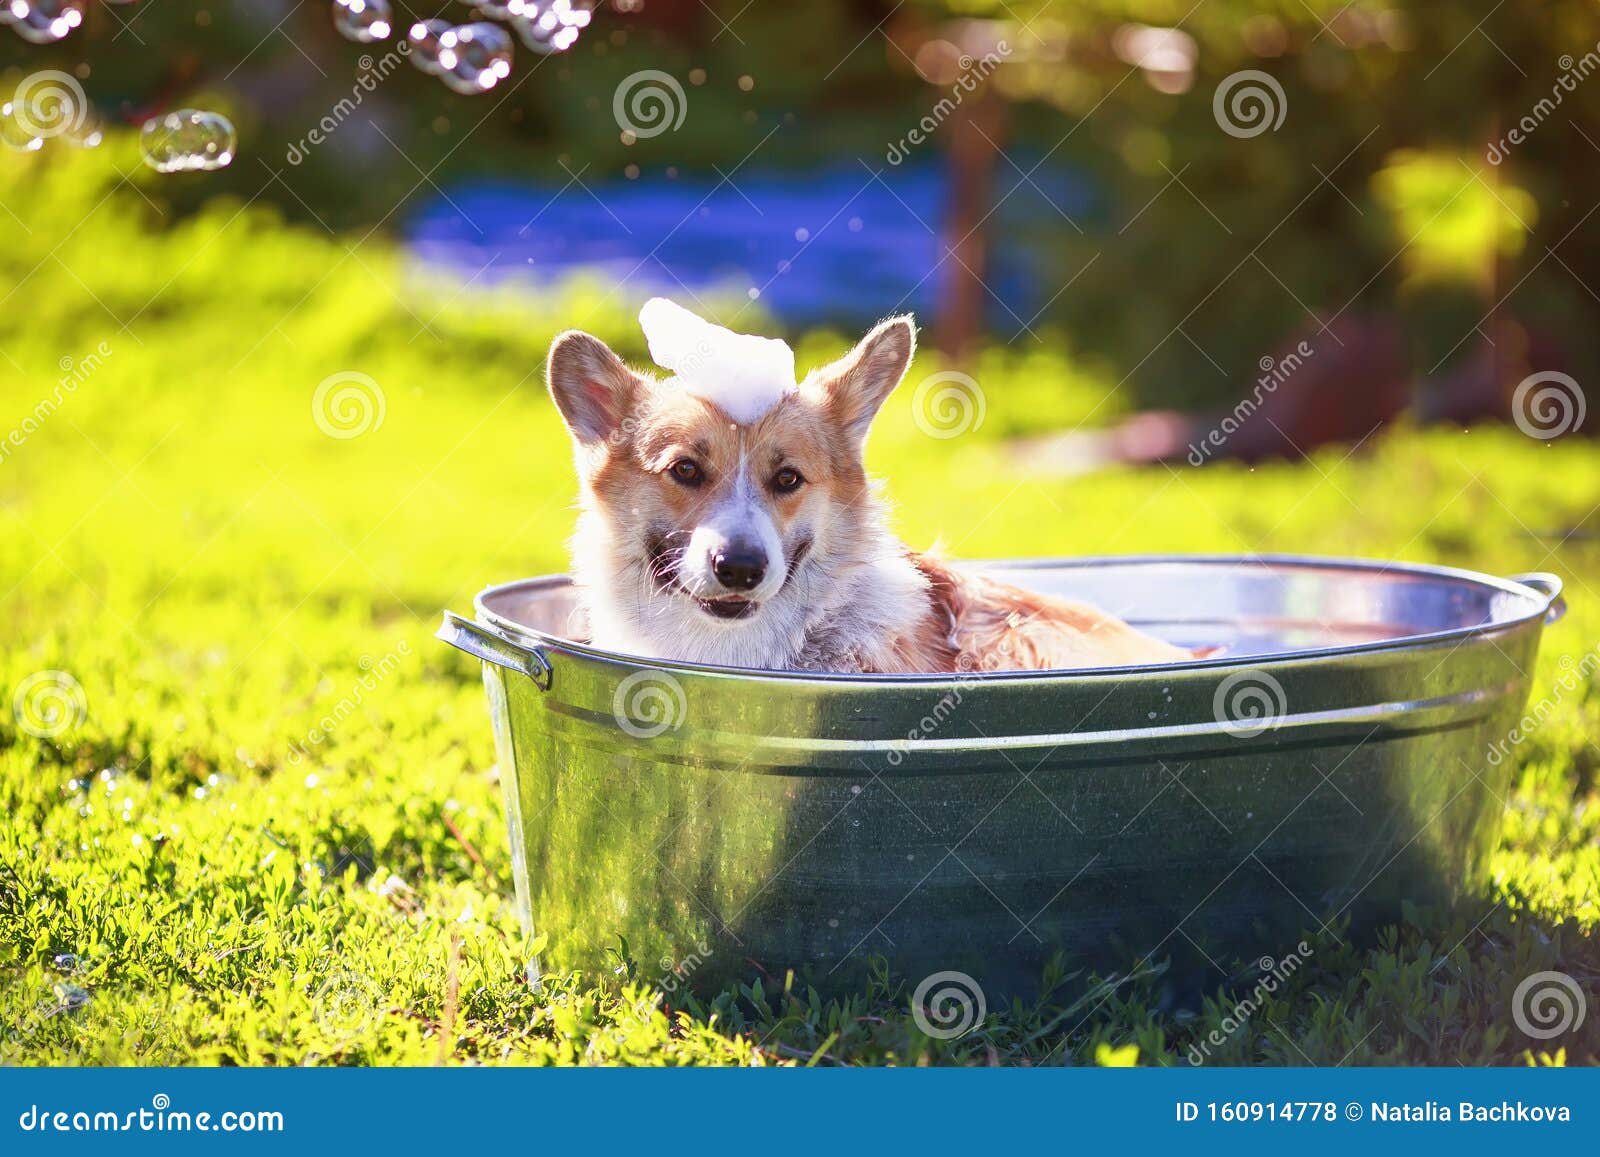 Portrait of a Cute Puppy Dog Red Corgi Washing in a Metal Trough ...